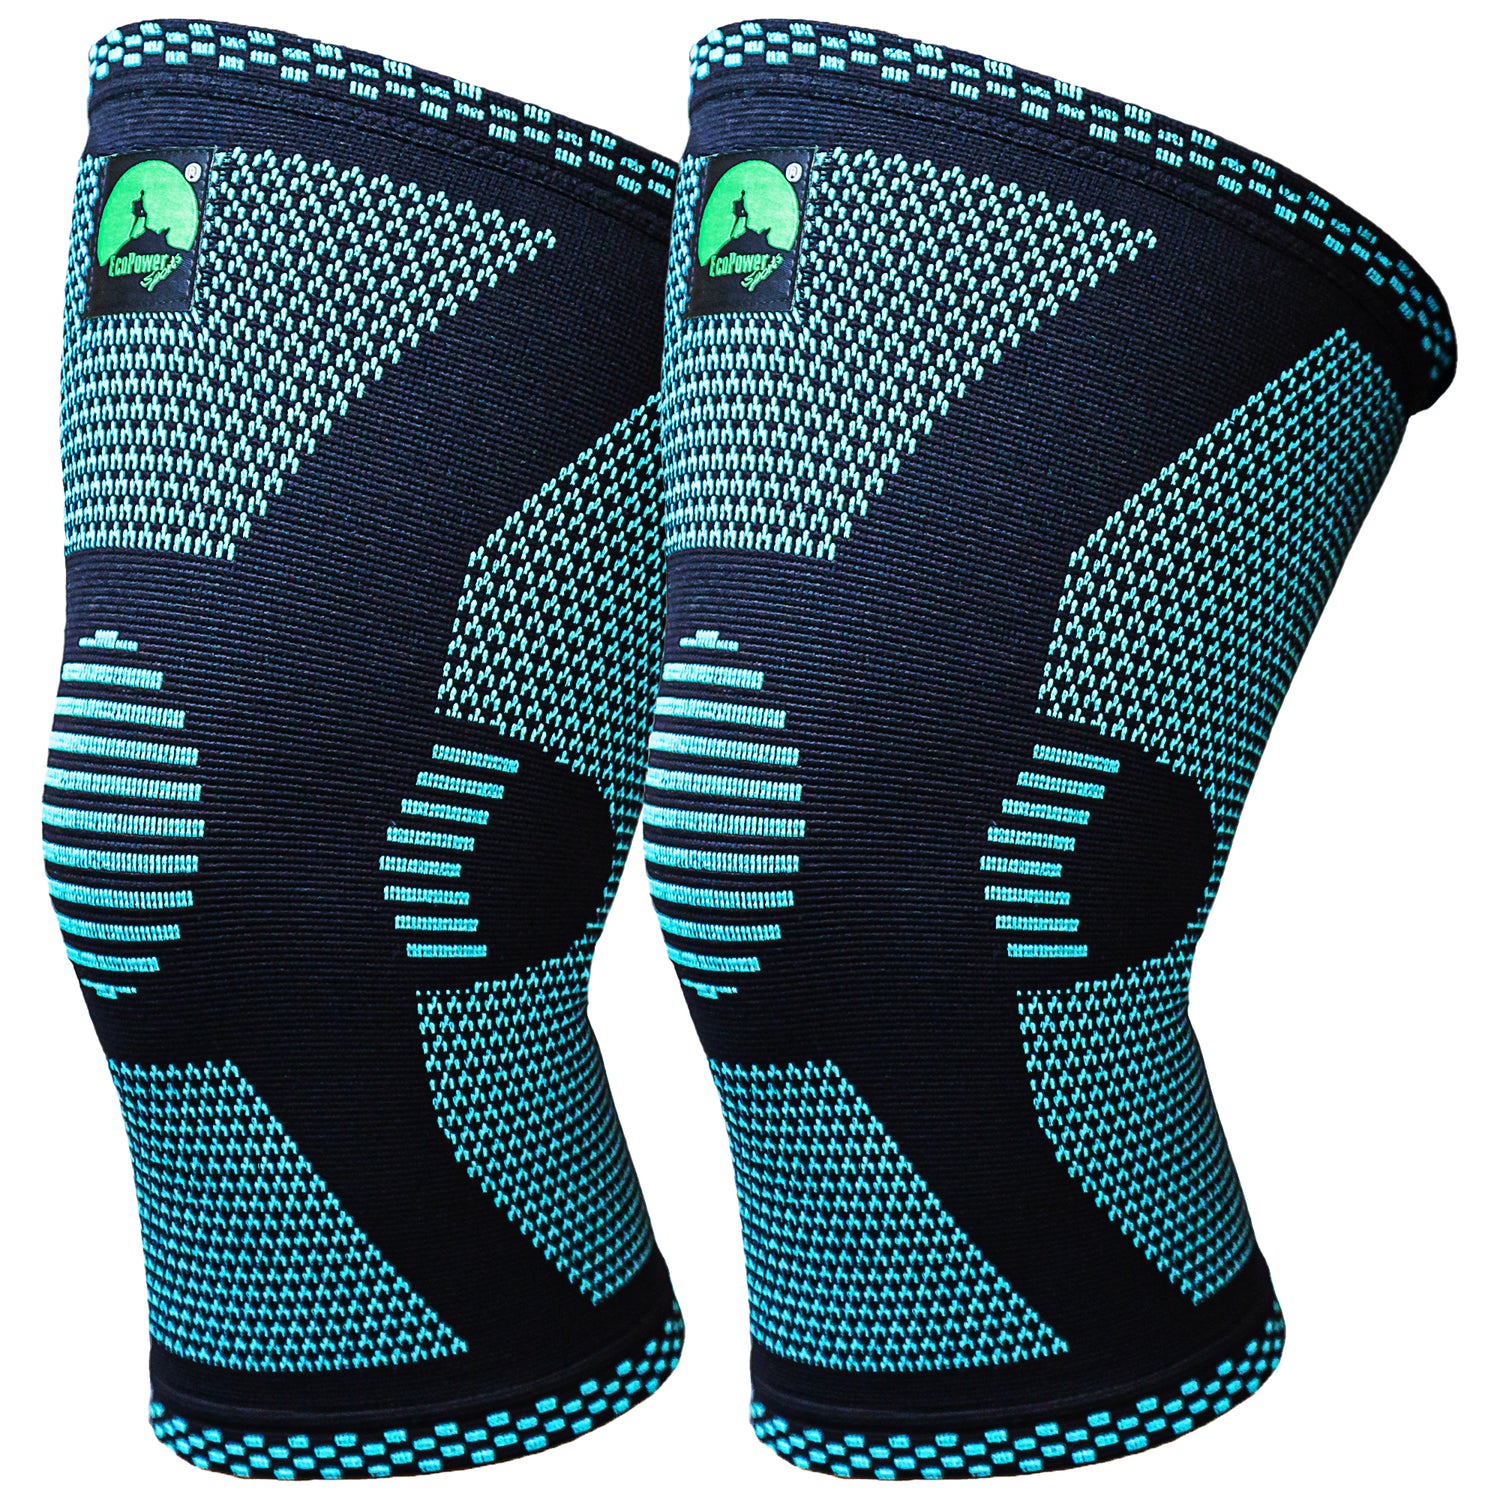 ECOPOWER SPORTS knee sleeve green pair.